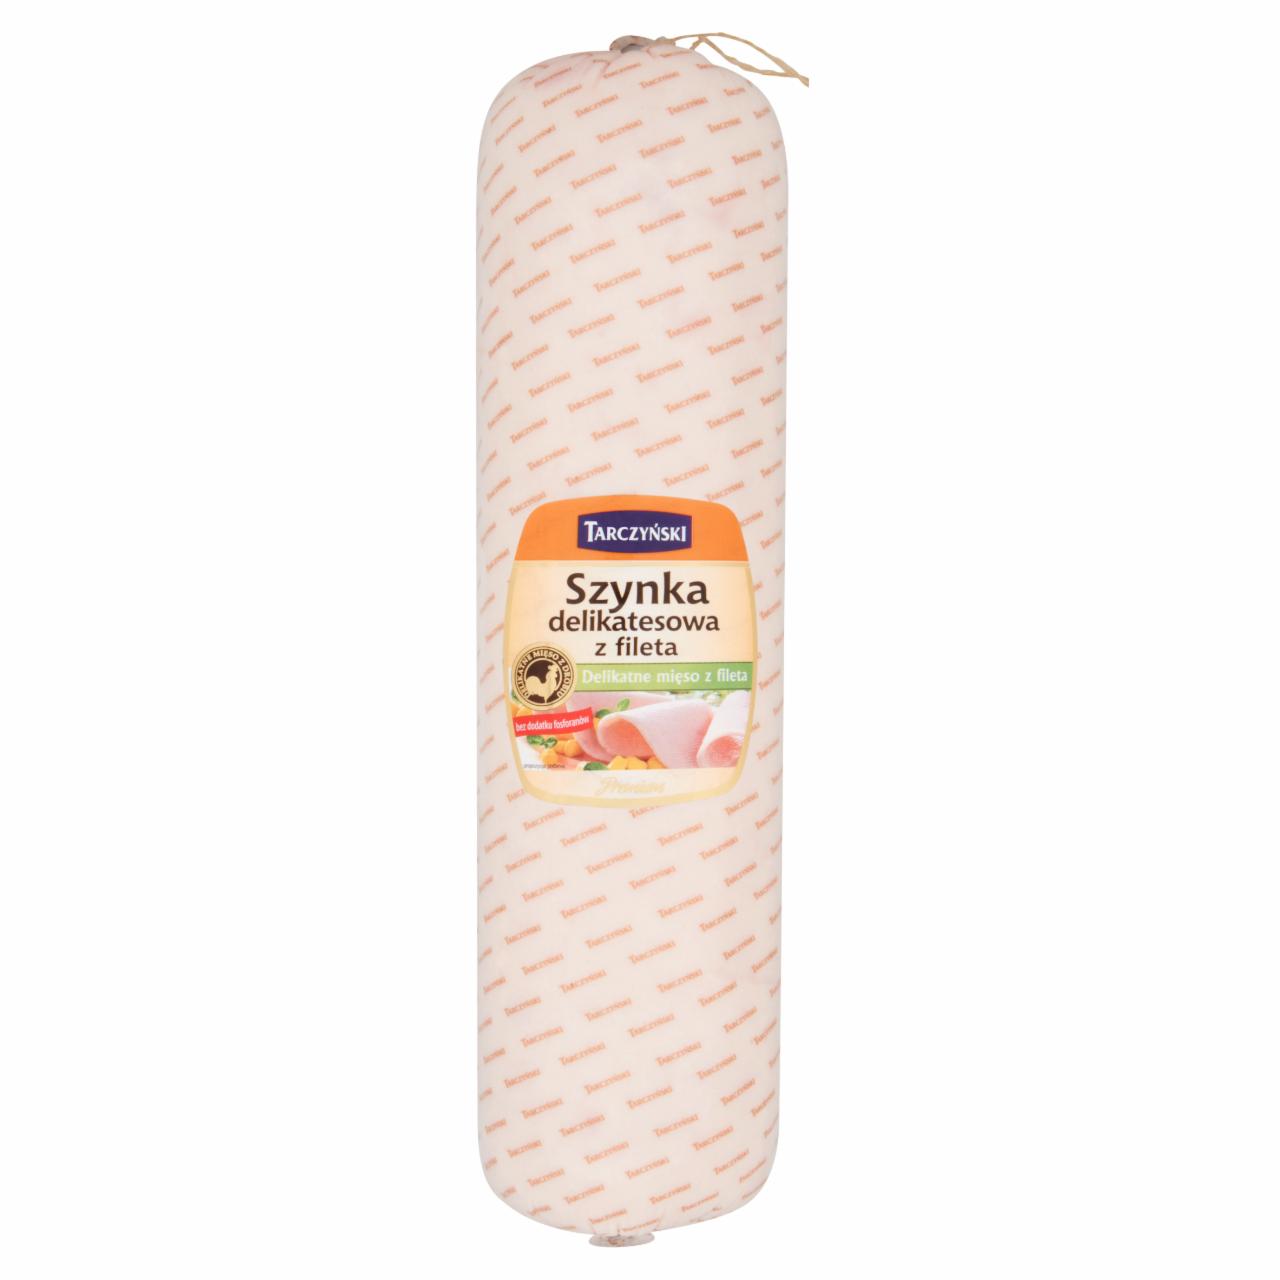 Photo - Tarczyński Premium Delicatessen Ham